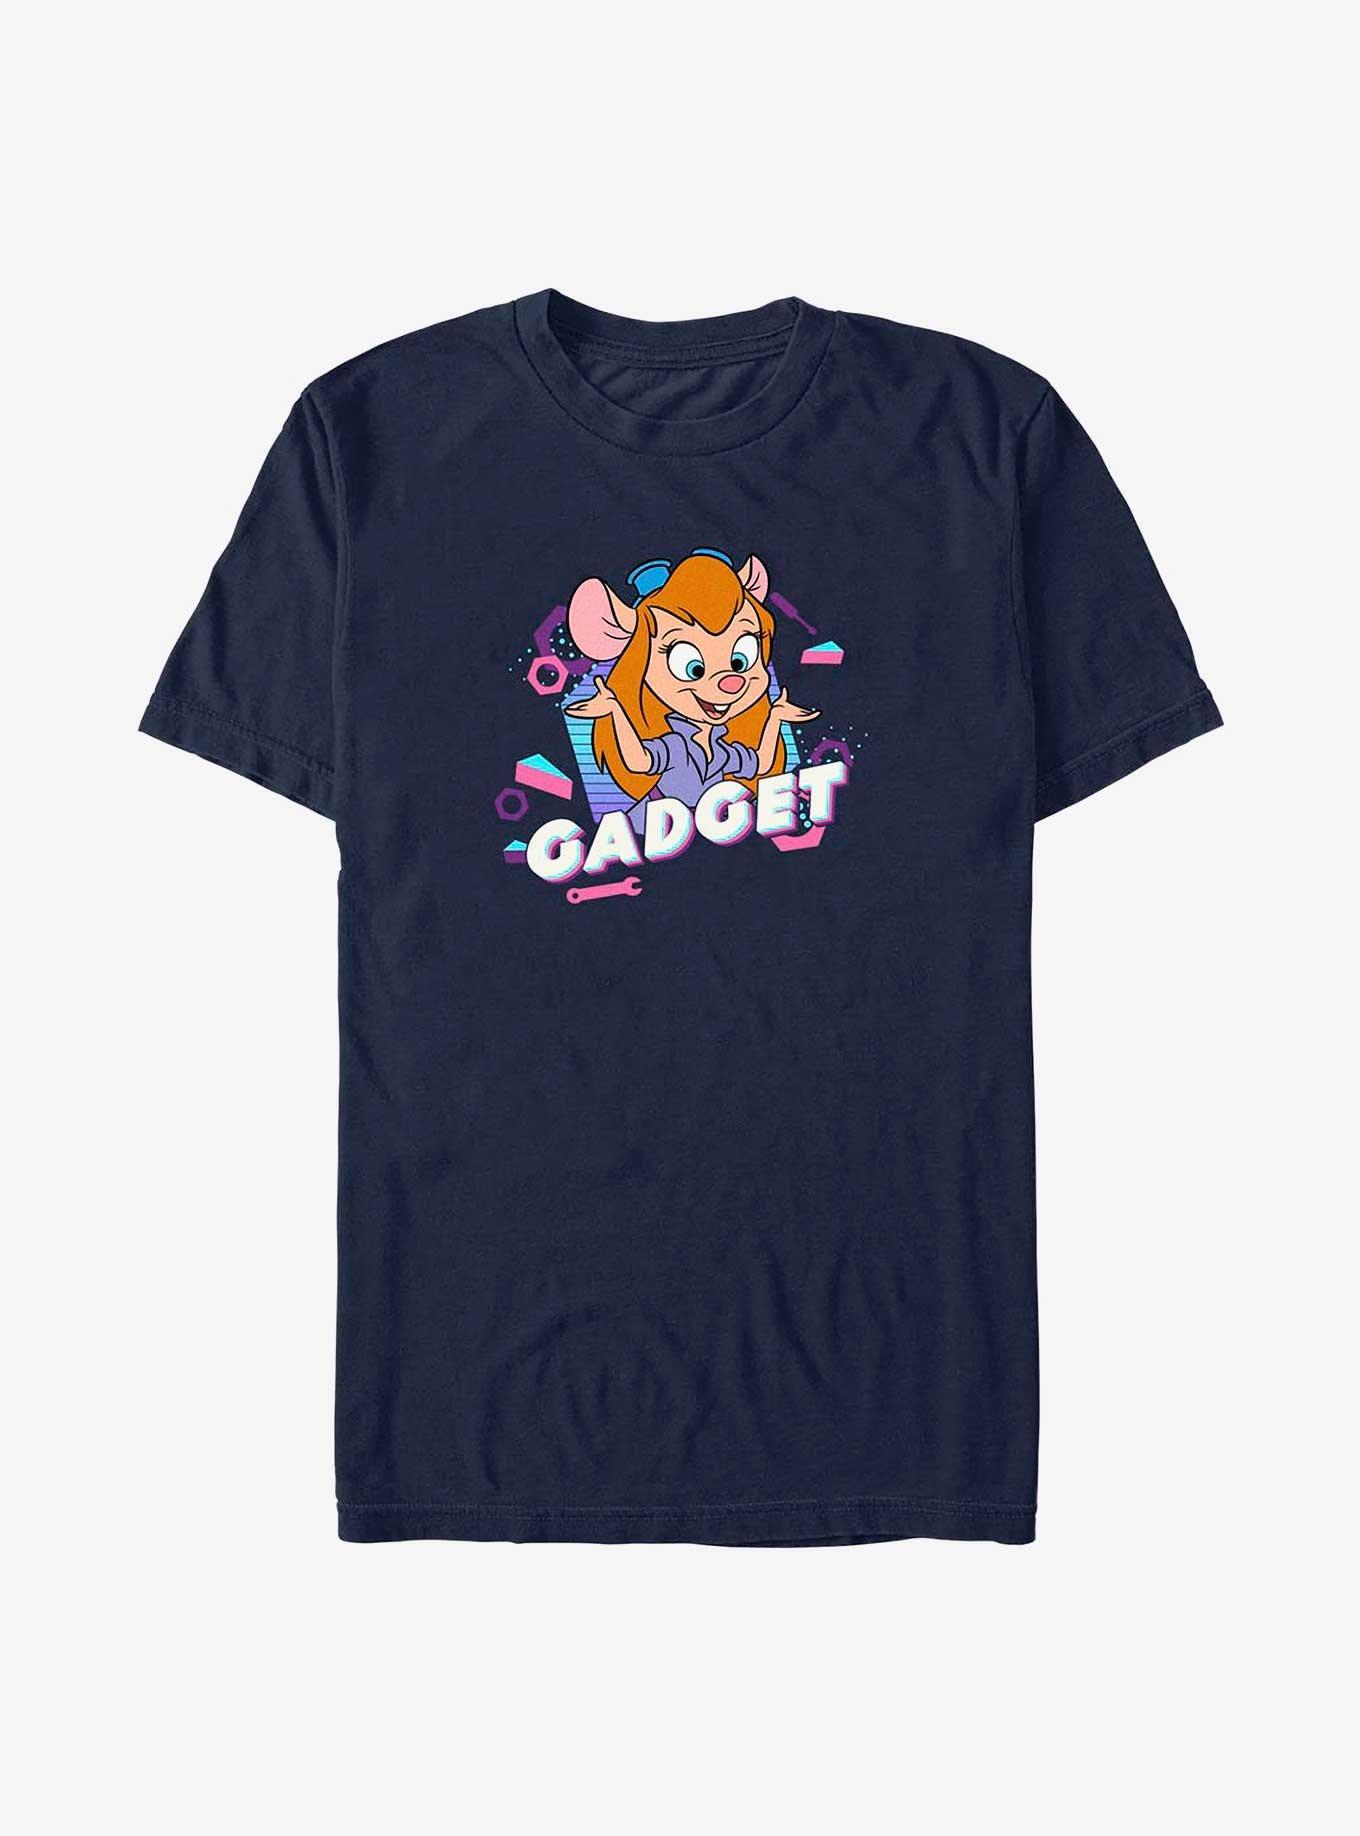 Disney Chip 'n' Dale Gadget Focus Extra Soft T-Shirt